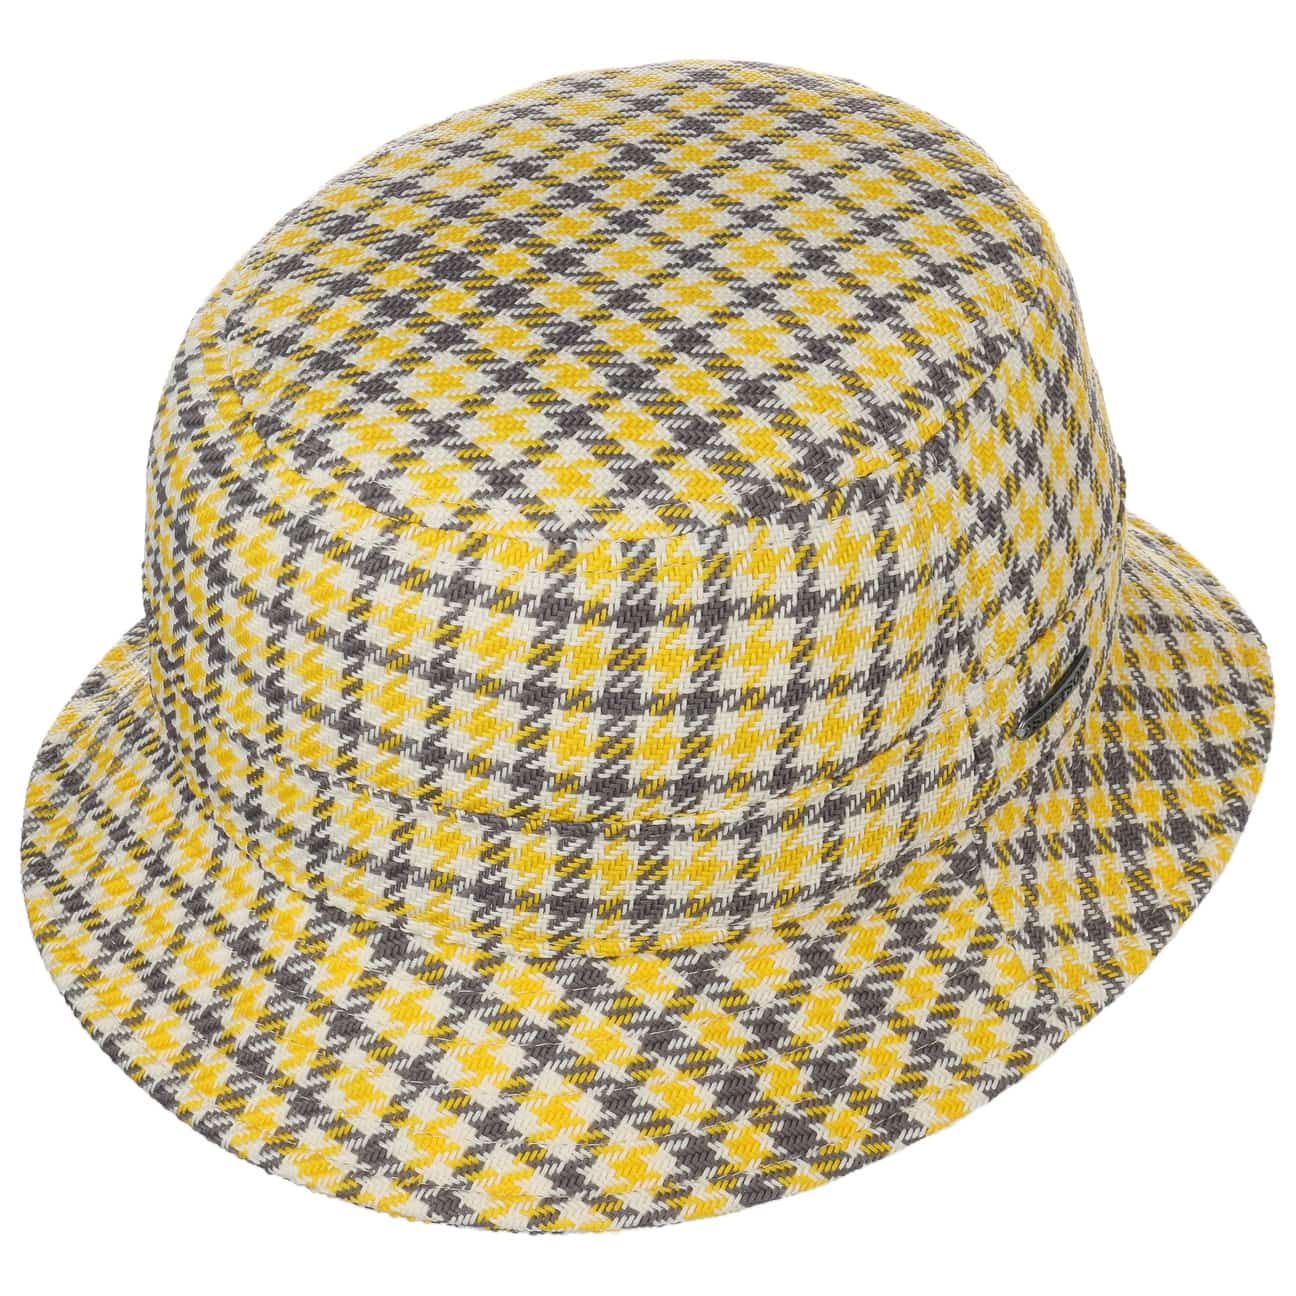 Stetson Bolcott Bucket Check Cloth Hat